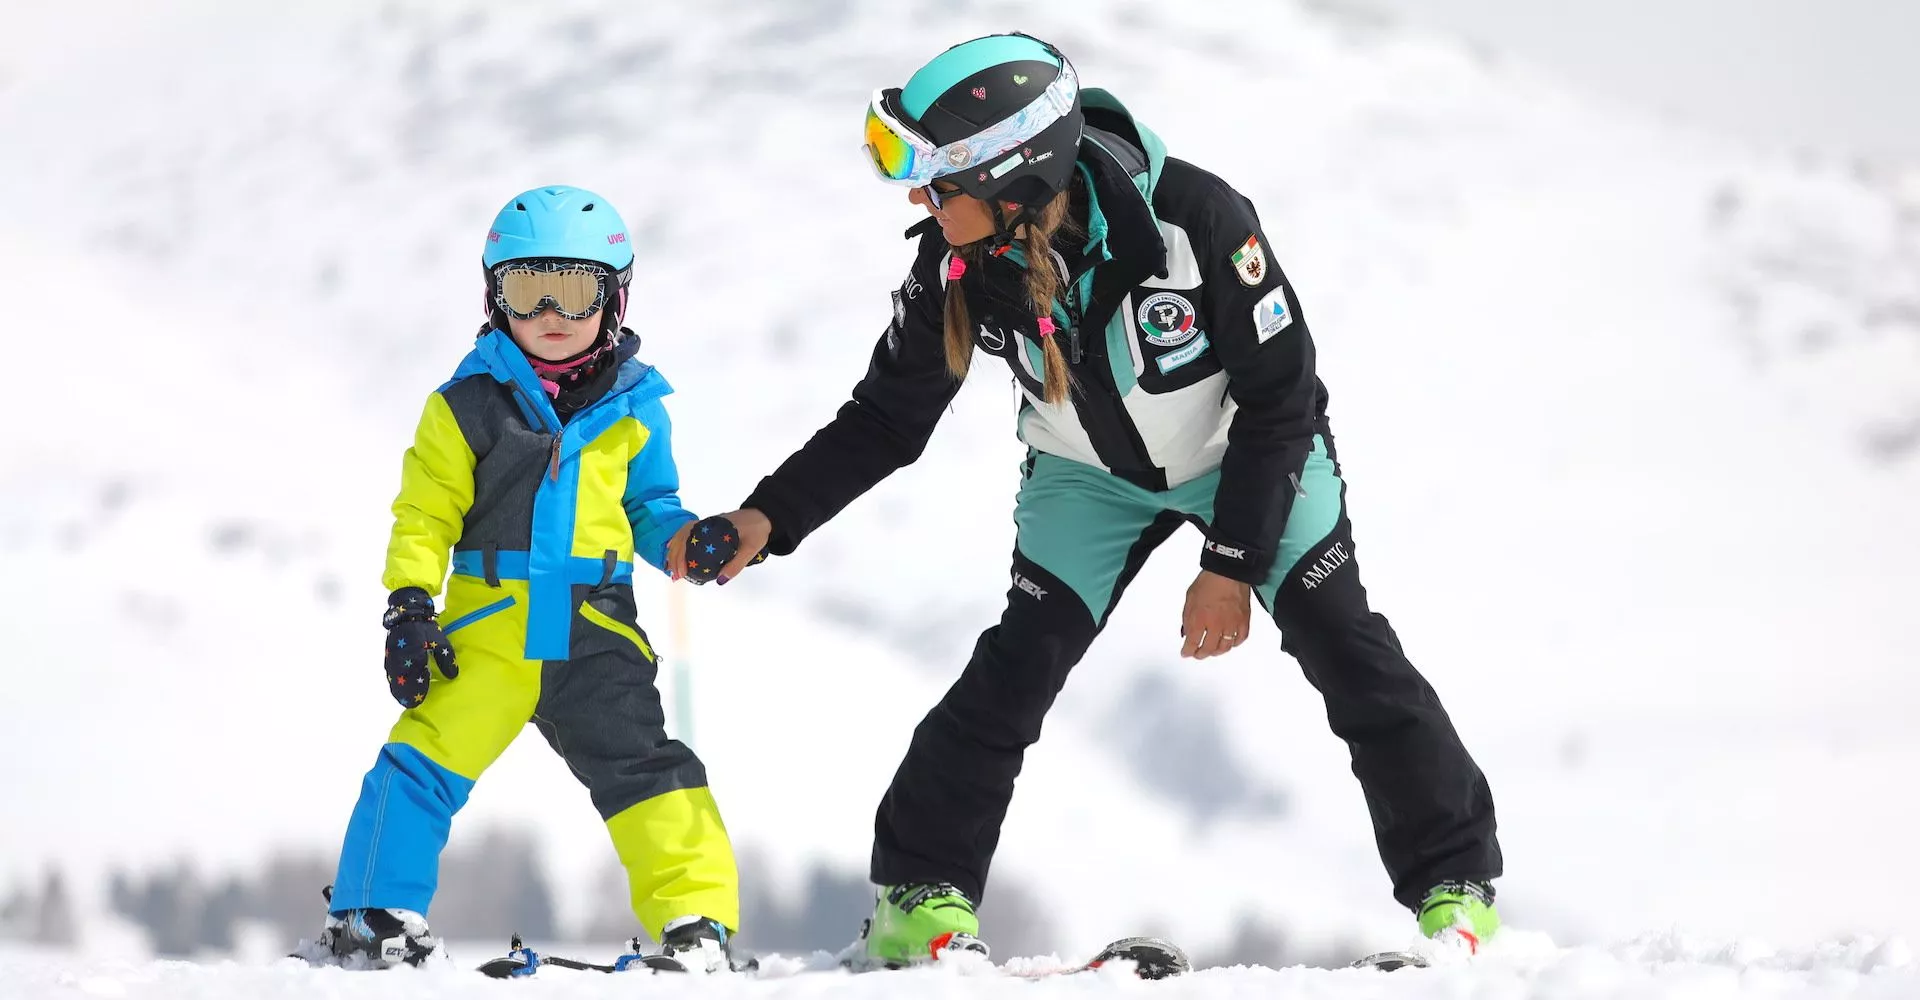 Scuola Sci & Snowboard Ski School in Italy, Europe | Snowboarding,Skiing - Rated 0.7